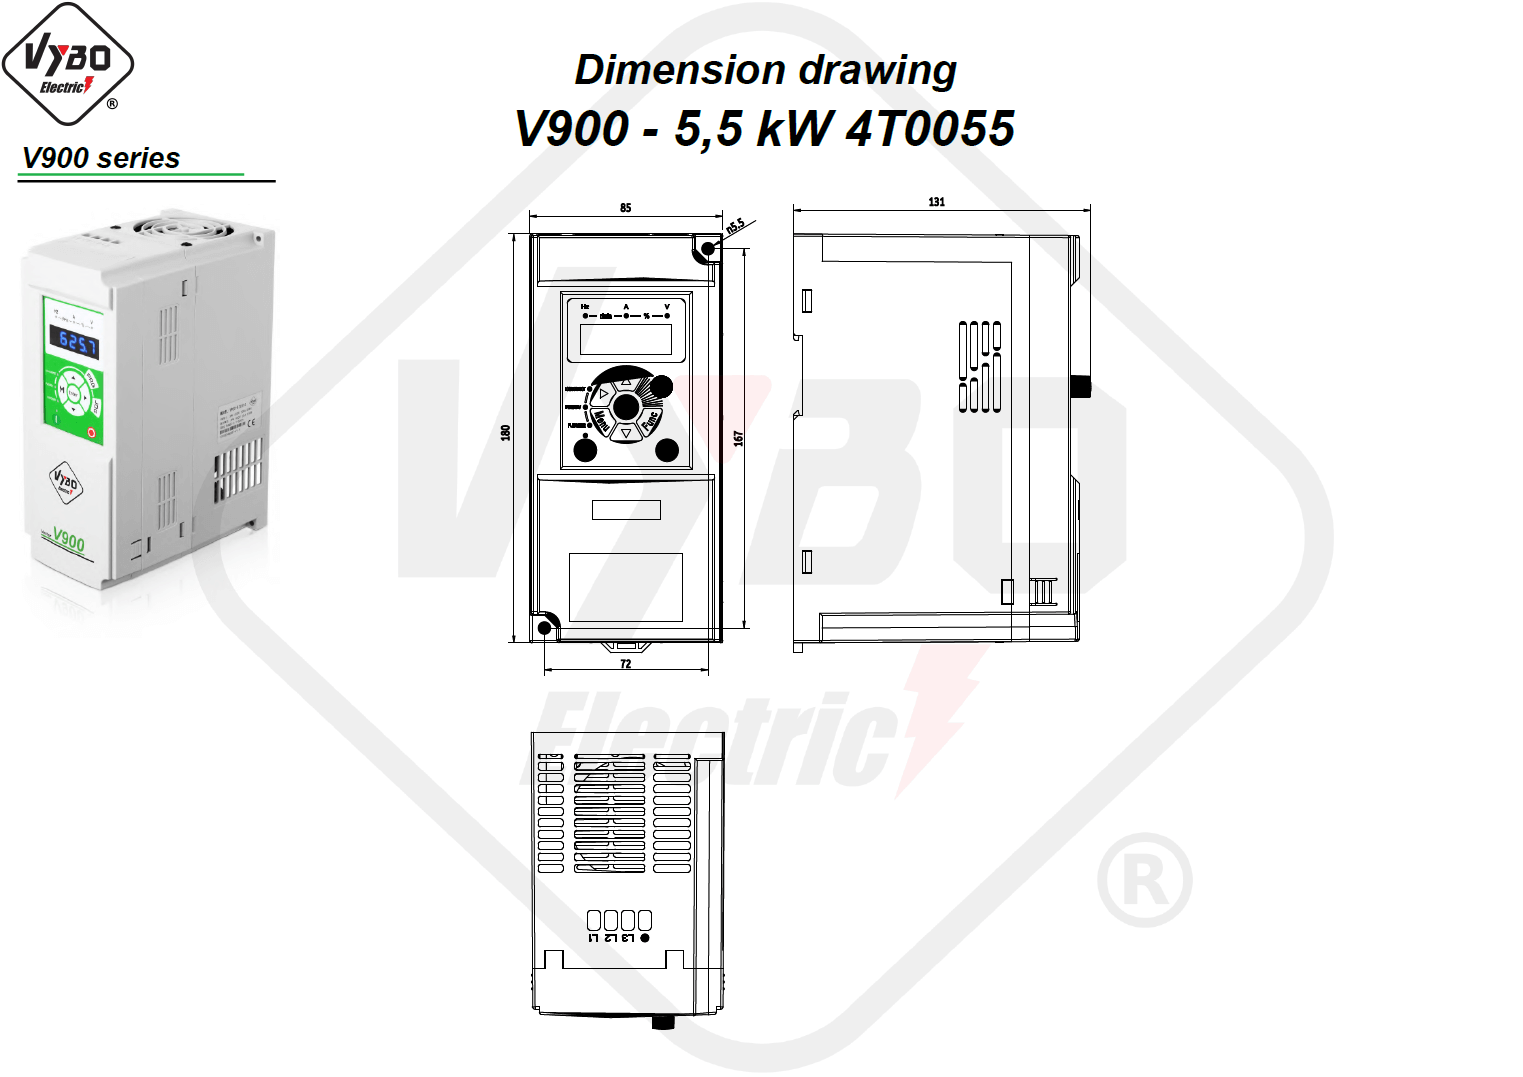 Dimensional drawing V900 4T0055